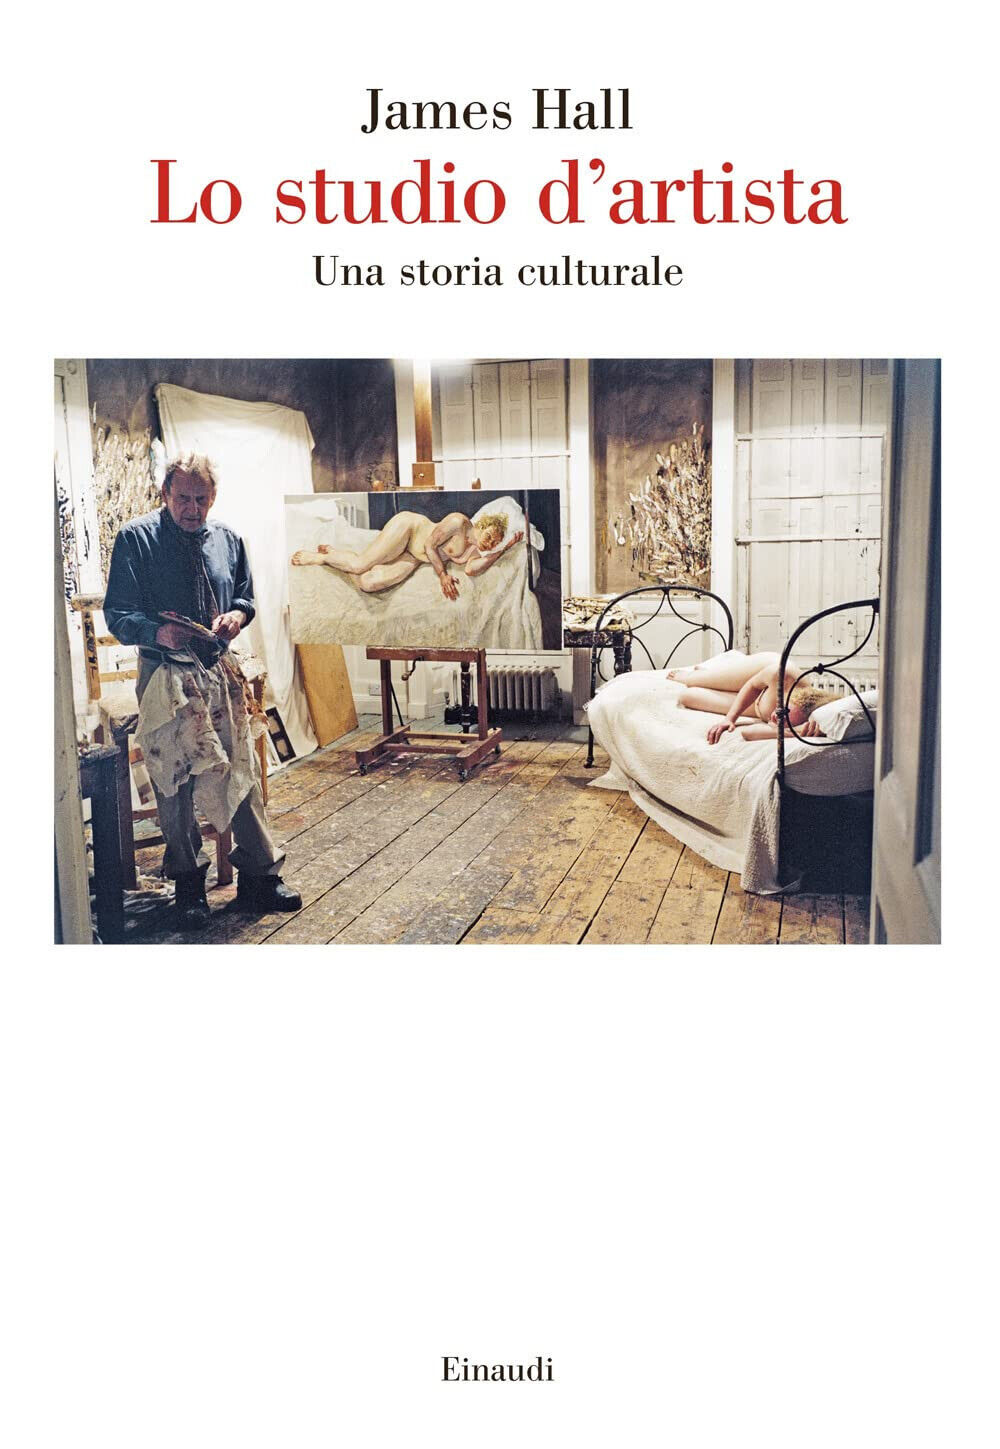 Lo studio d'artista. Una storia culturale - James Hall - Einaudi, 2022